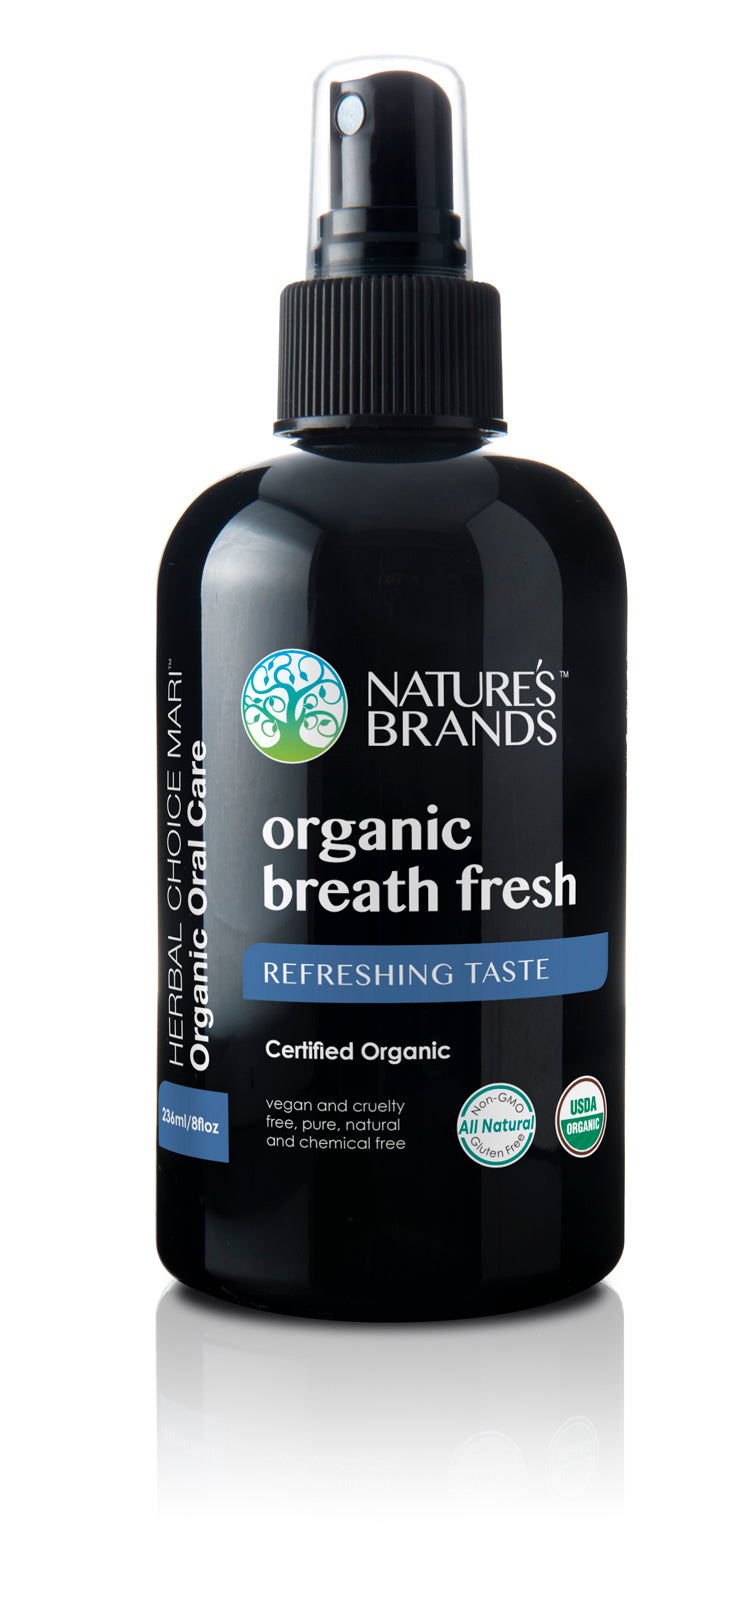 Herbal Choice Mari Organic Breath Fresh - Herbal Choice Mari Organic Breath Fresh - Herbal Choice Mari Organic Breath Fresh